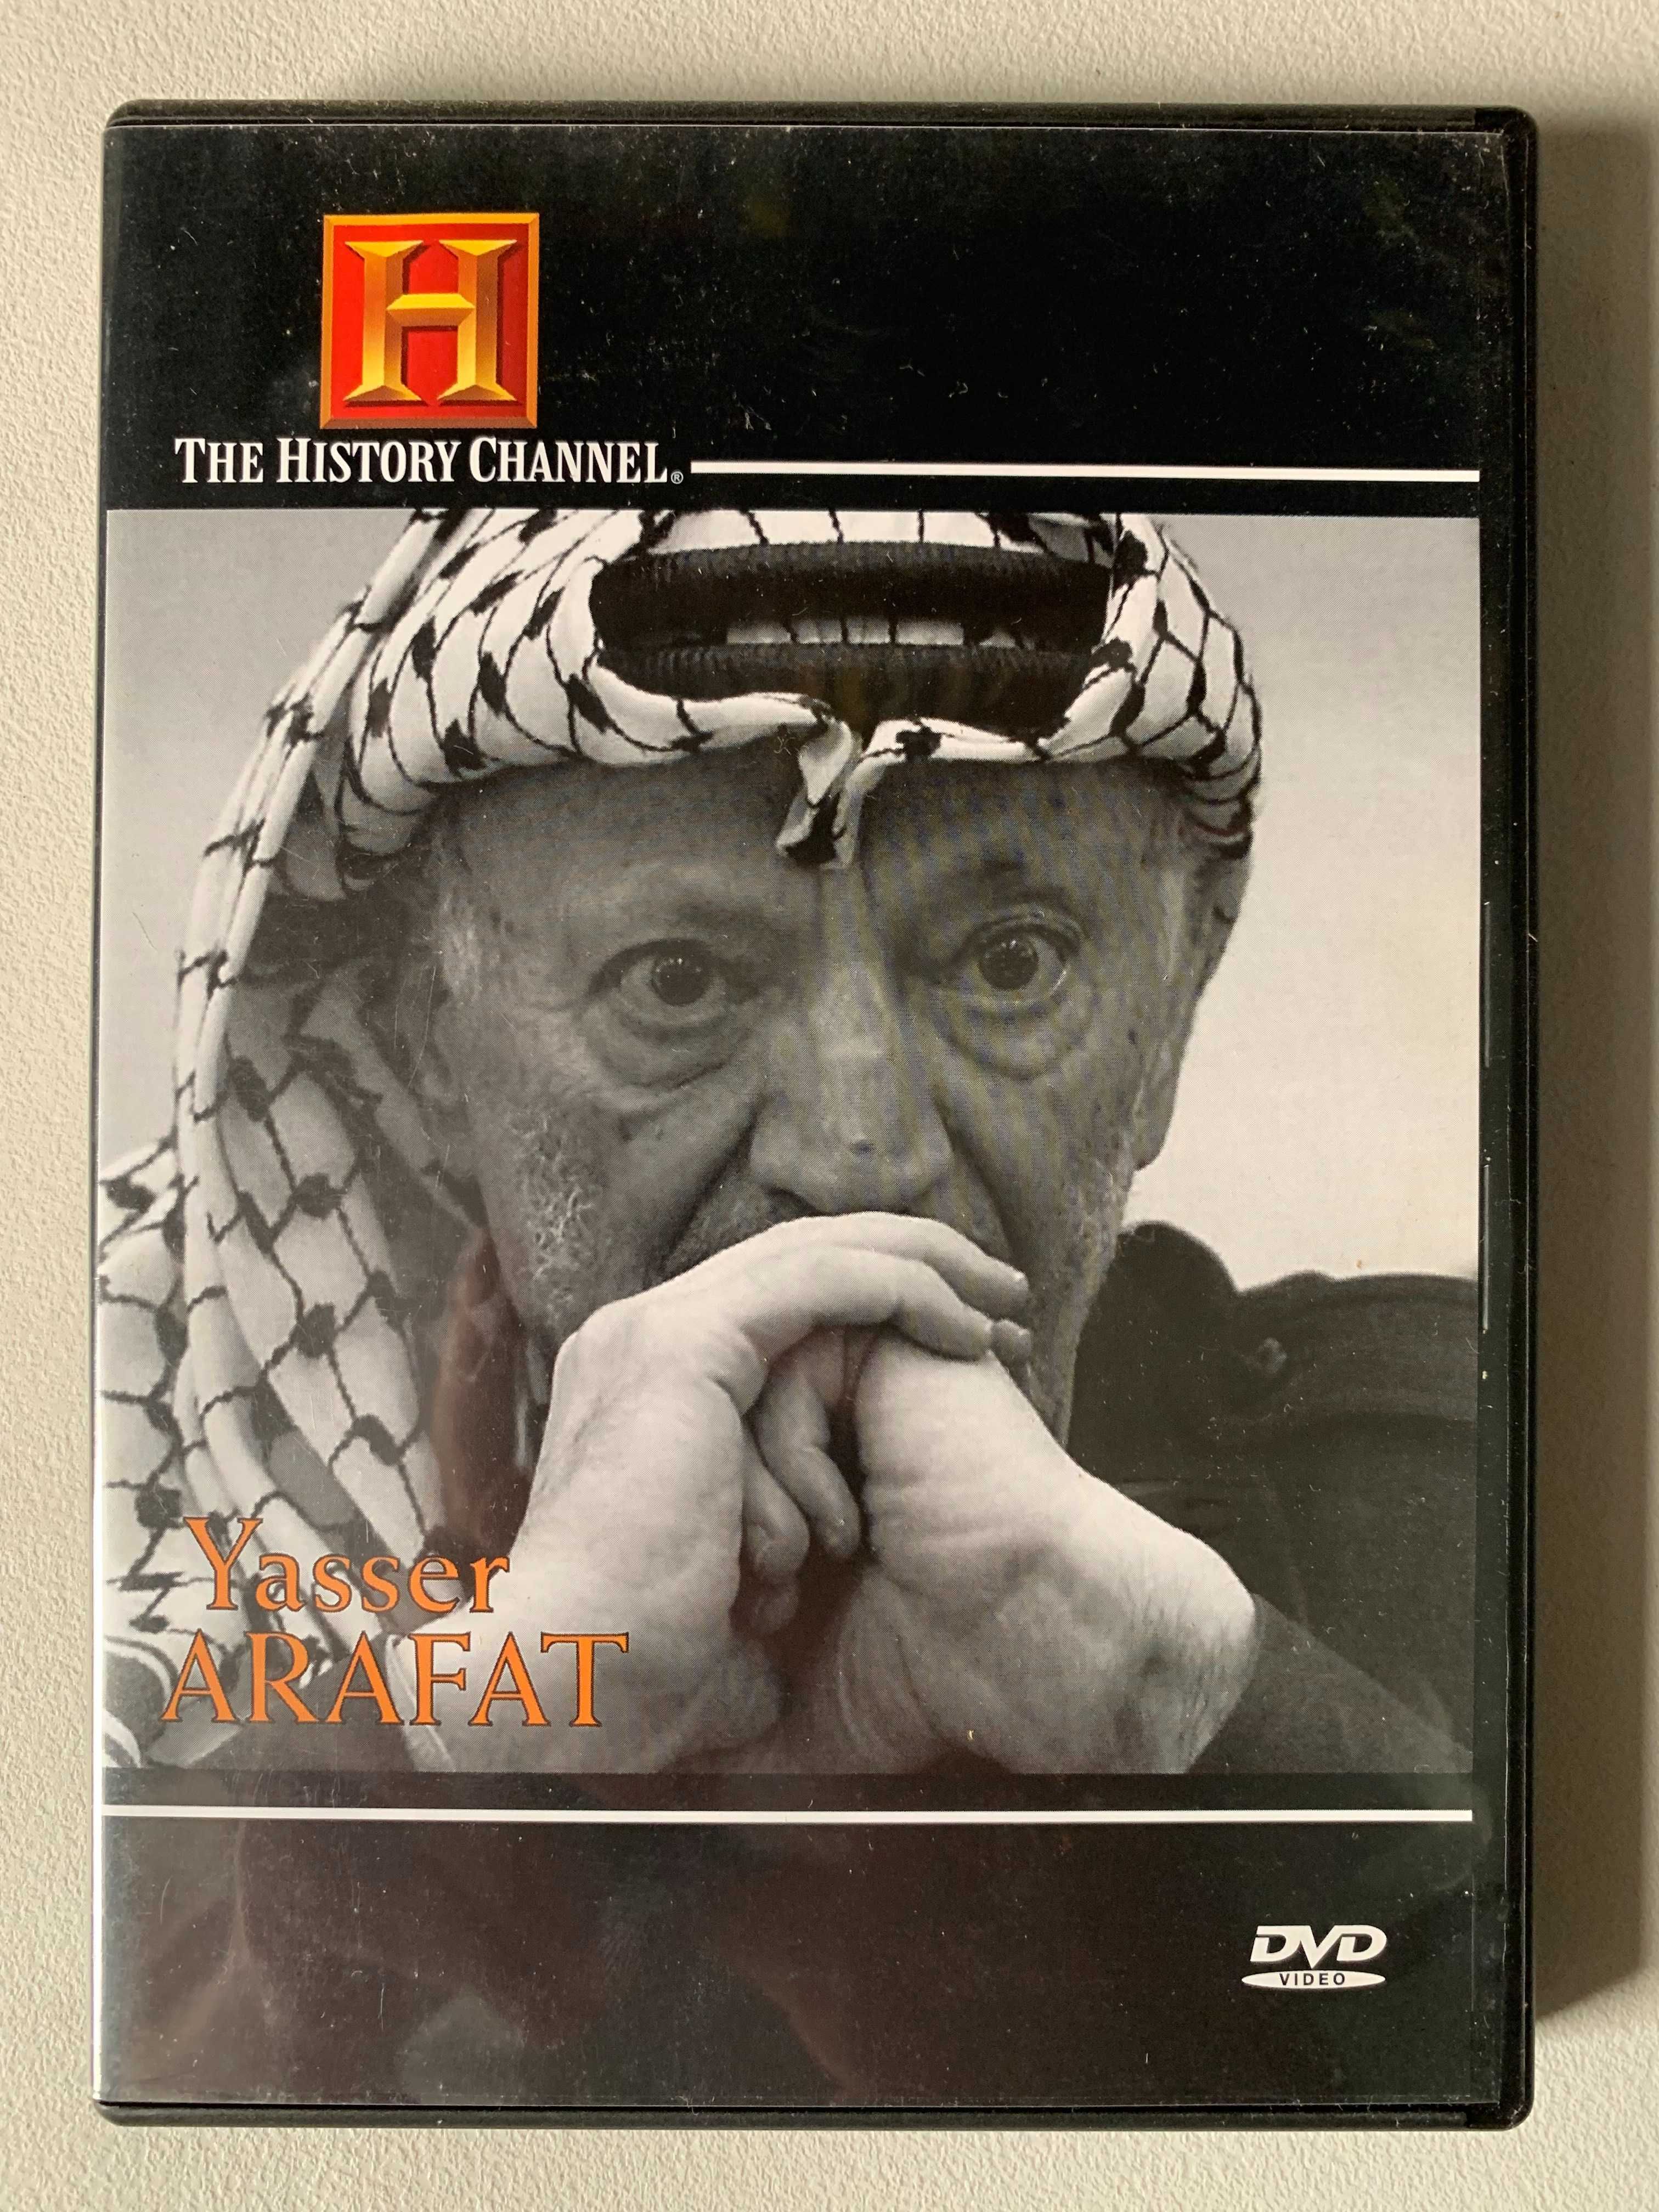 [DVD] Yasser Arafat - Biografia